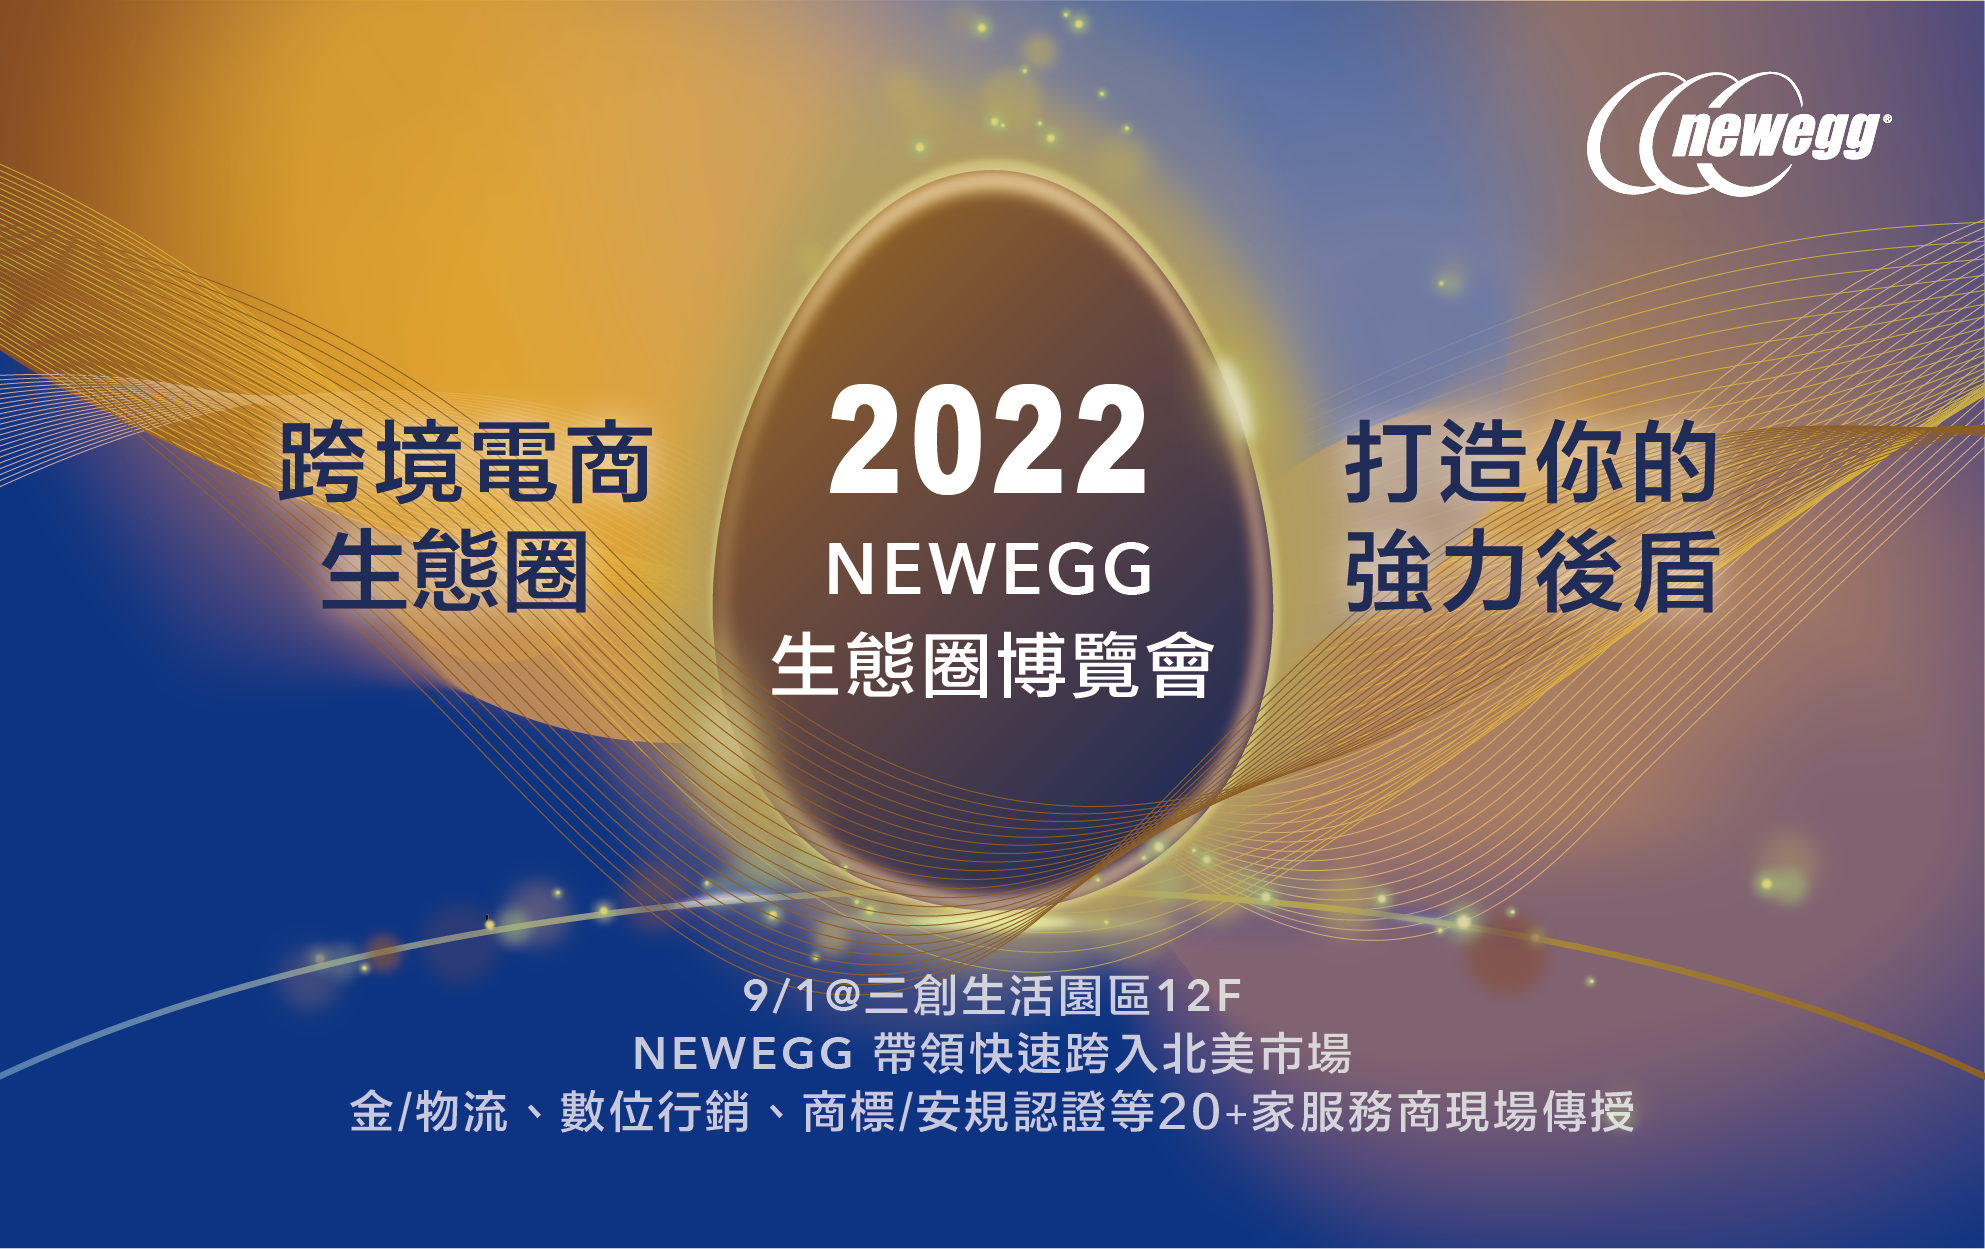 2022/09/01【2022 Newegg 生態圈博覽會】